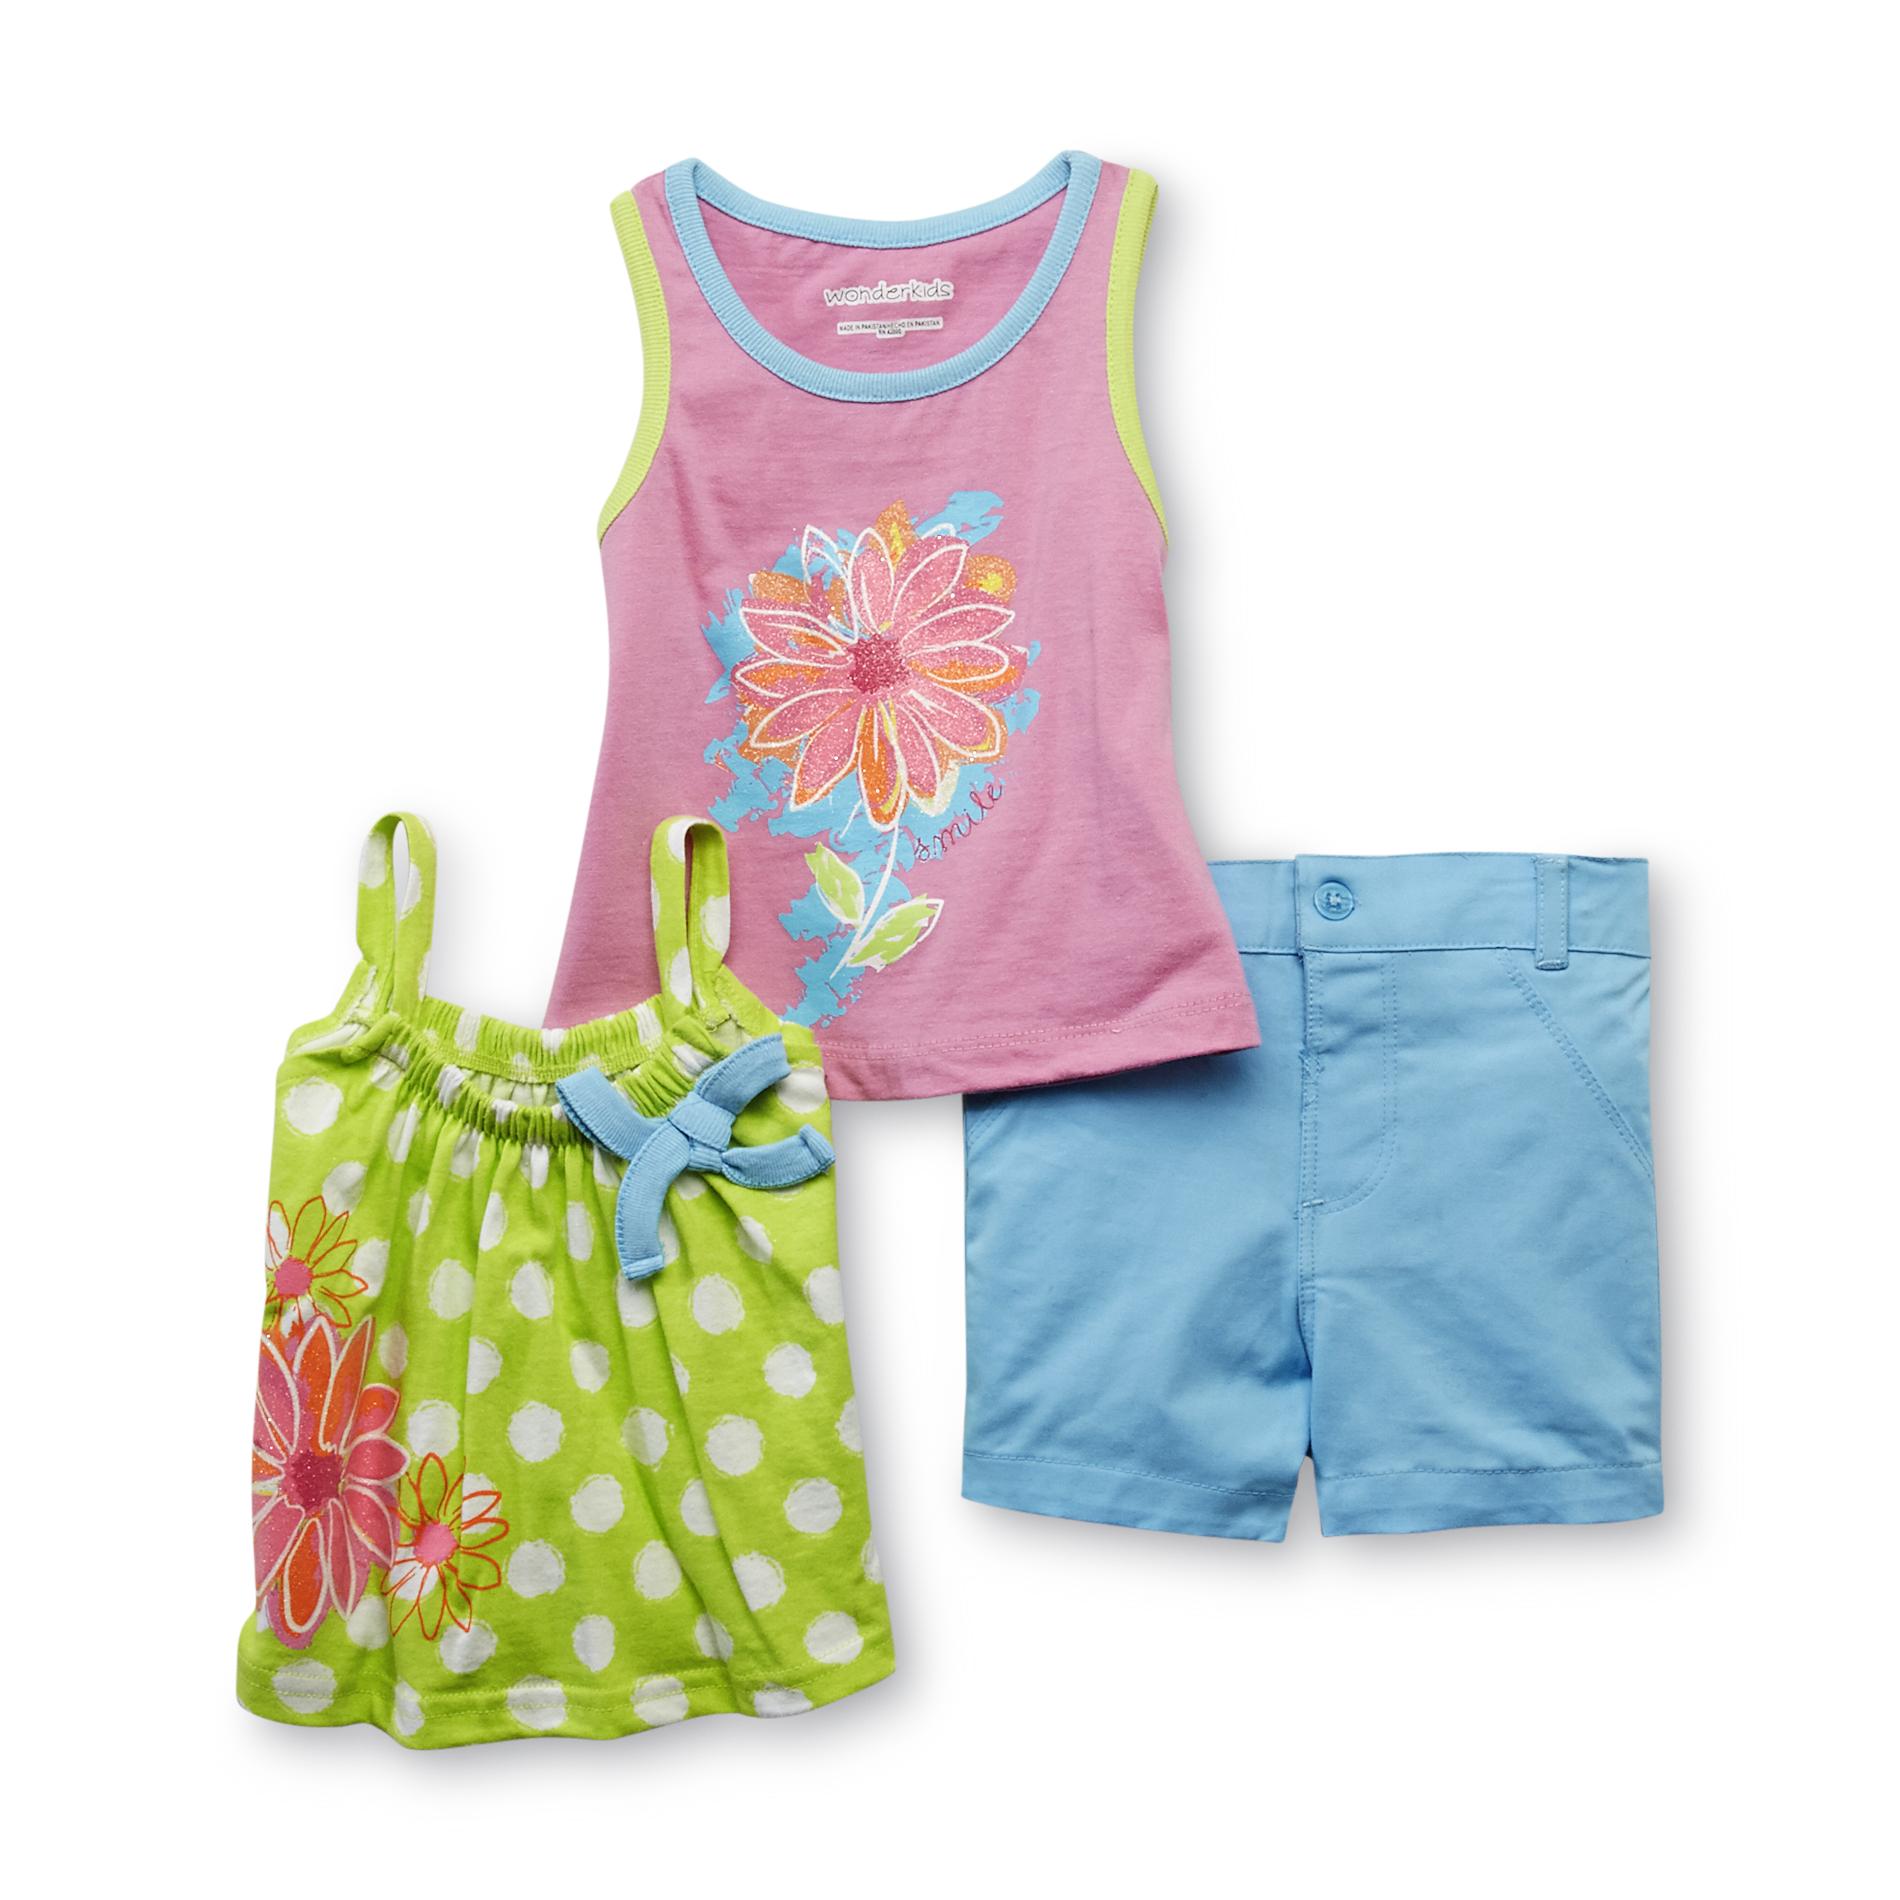 WonderKids Infant & Toddler Girl's Top  Tank Top & Shorts - Floral